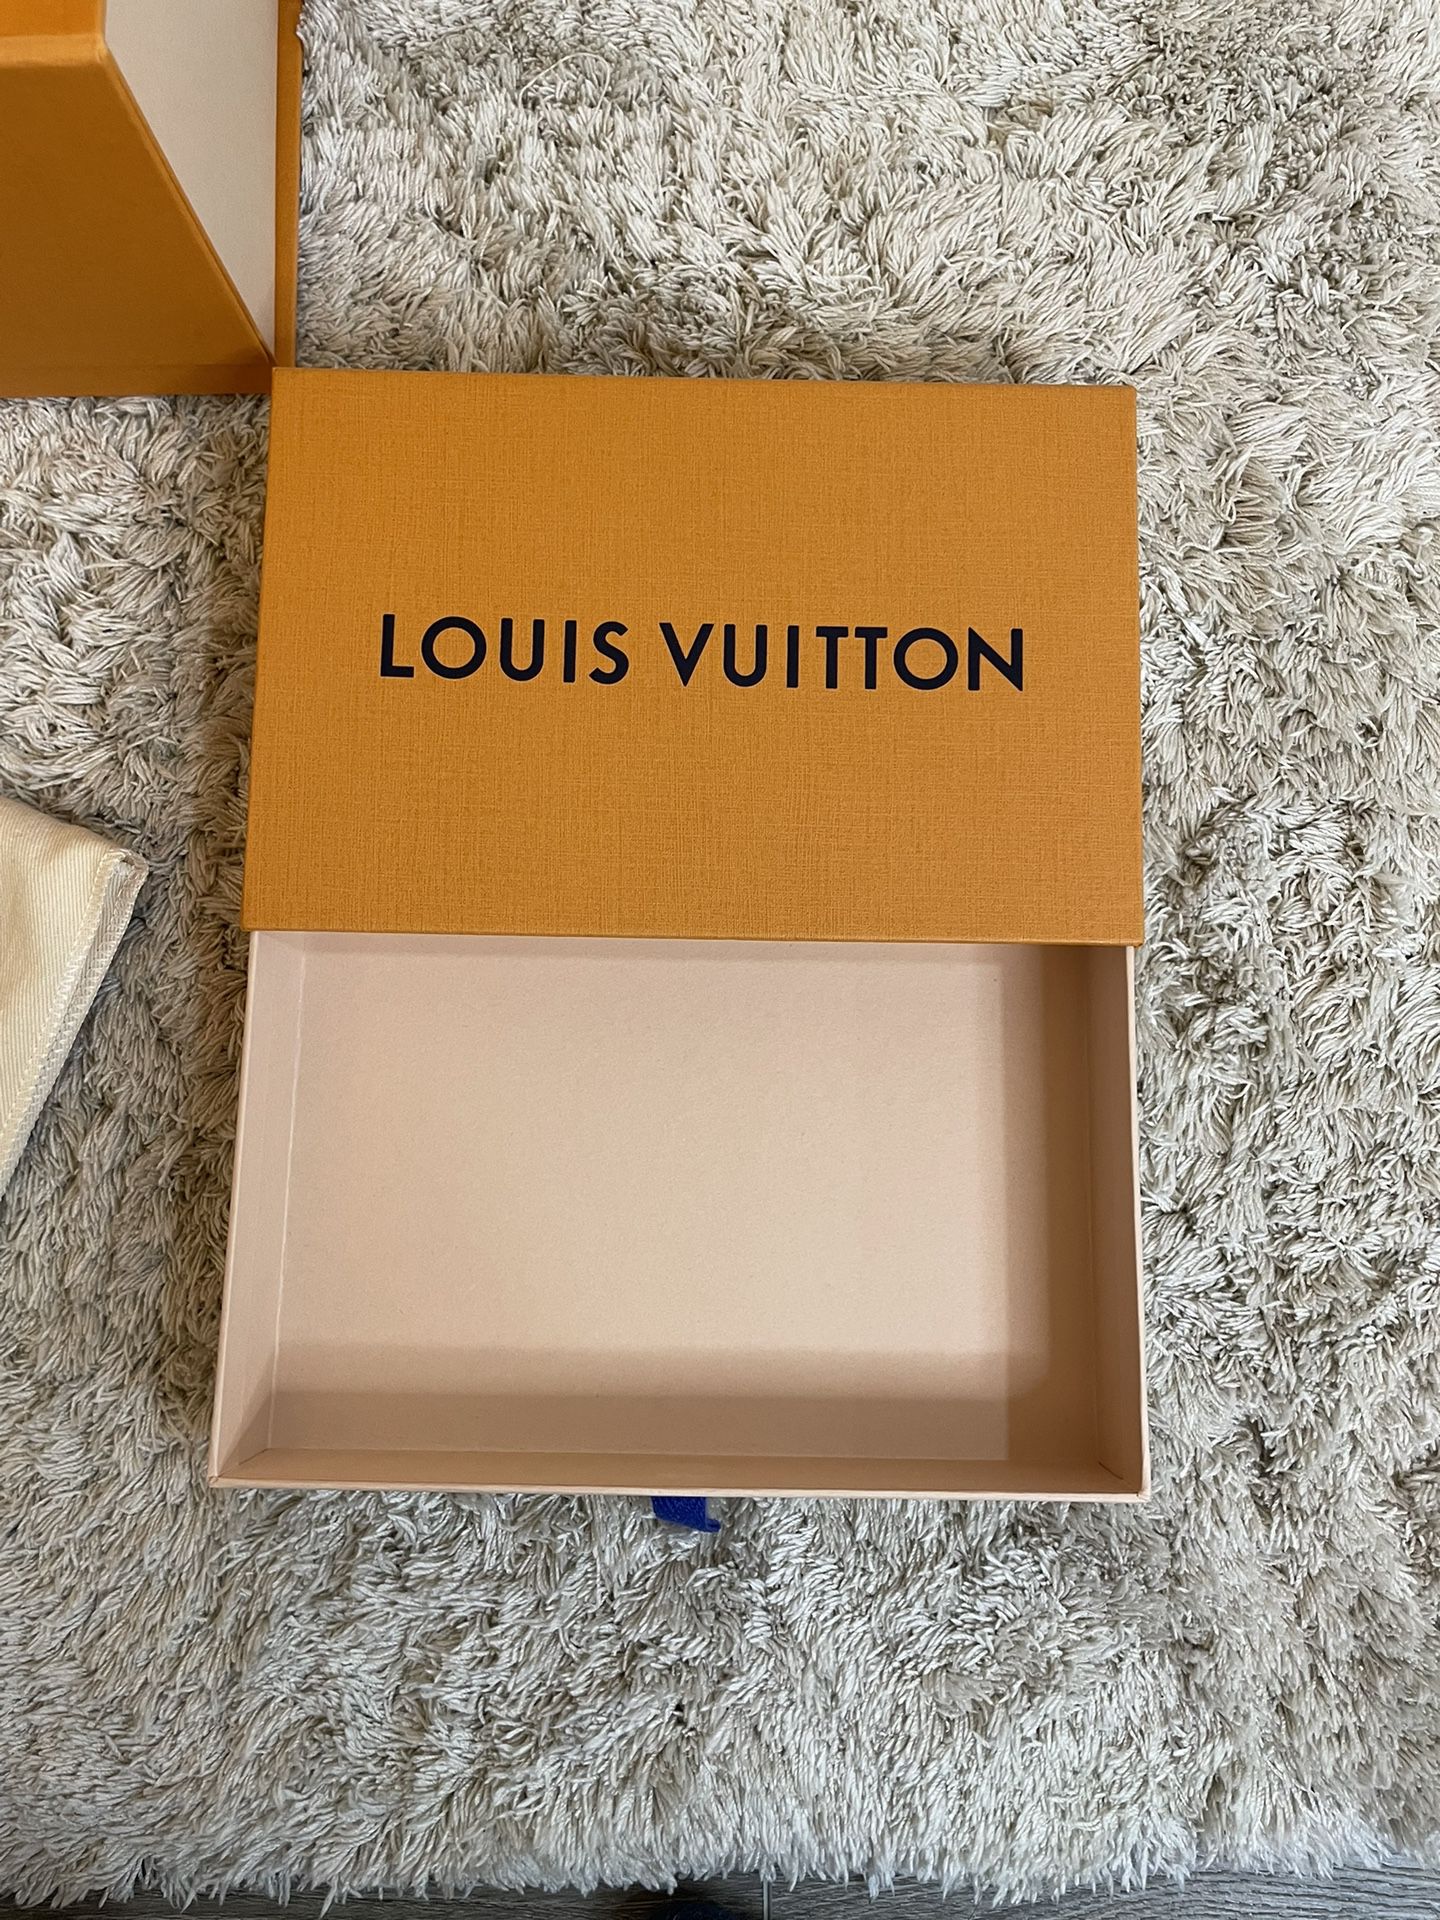 Louis Vuitton Wallet Size Box for Sale in San Jose, CA - OfferUp